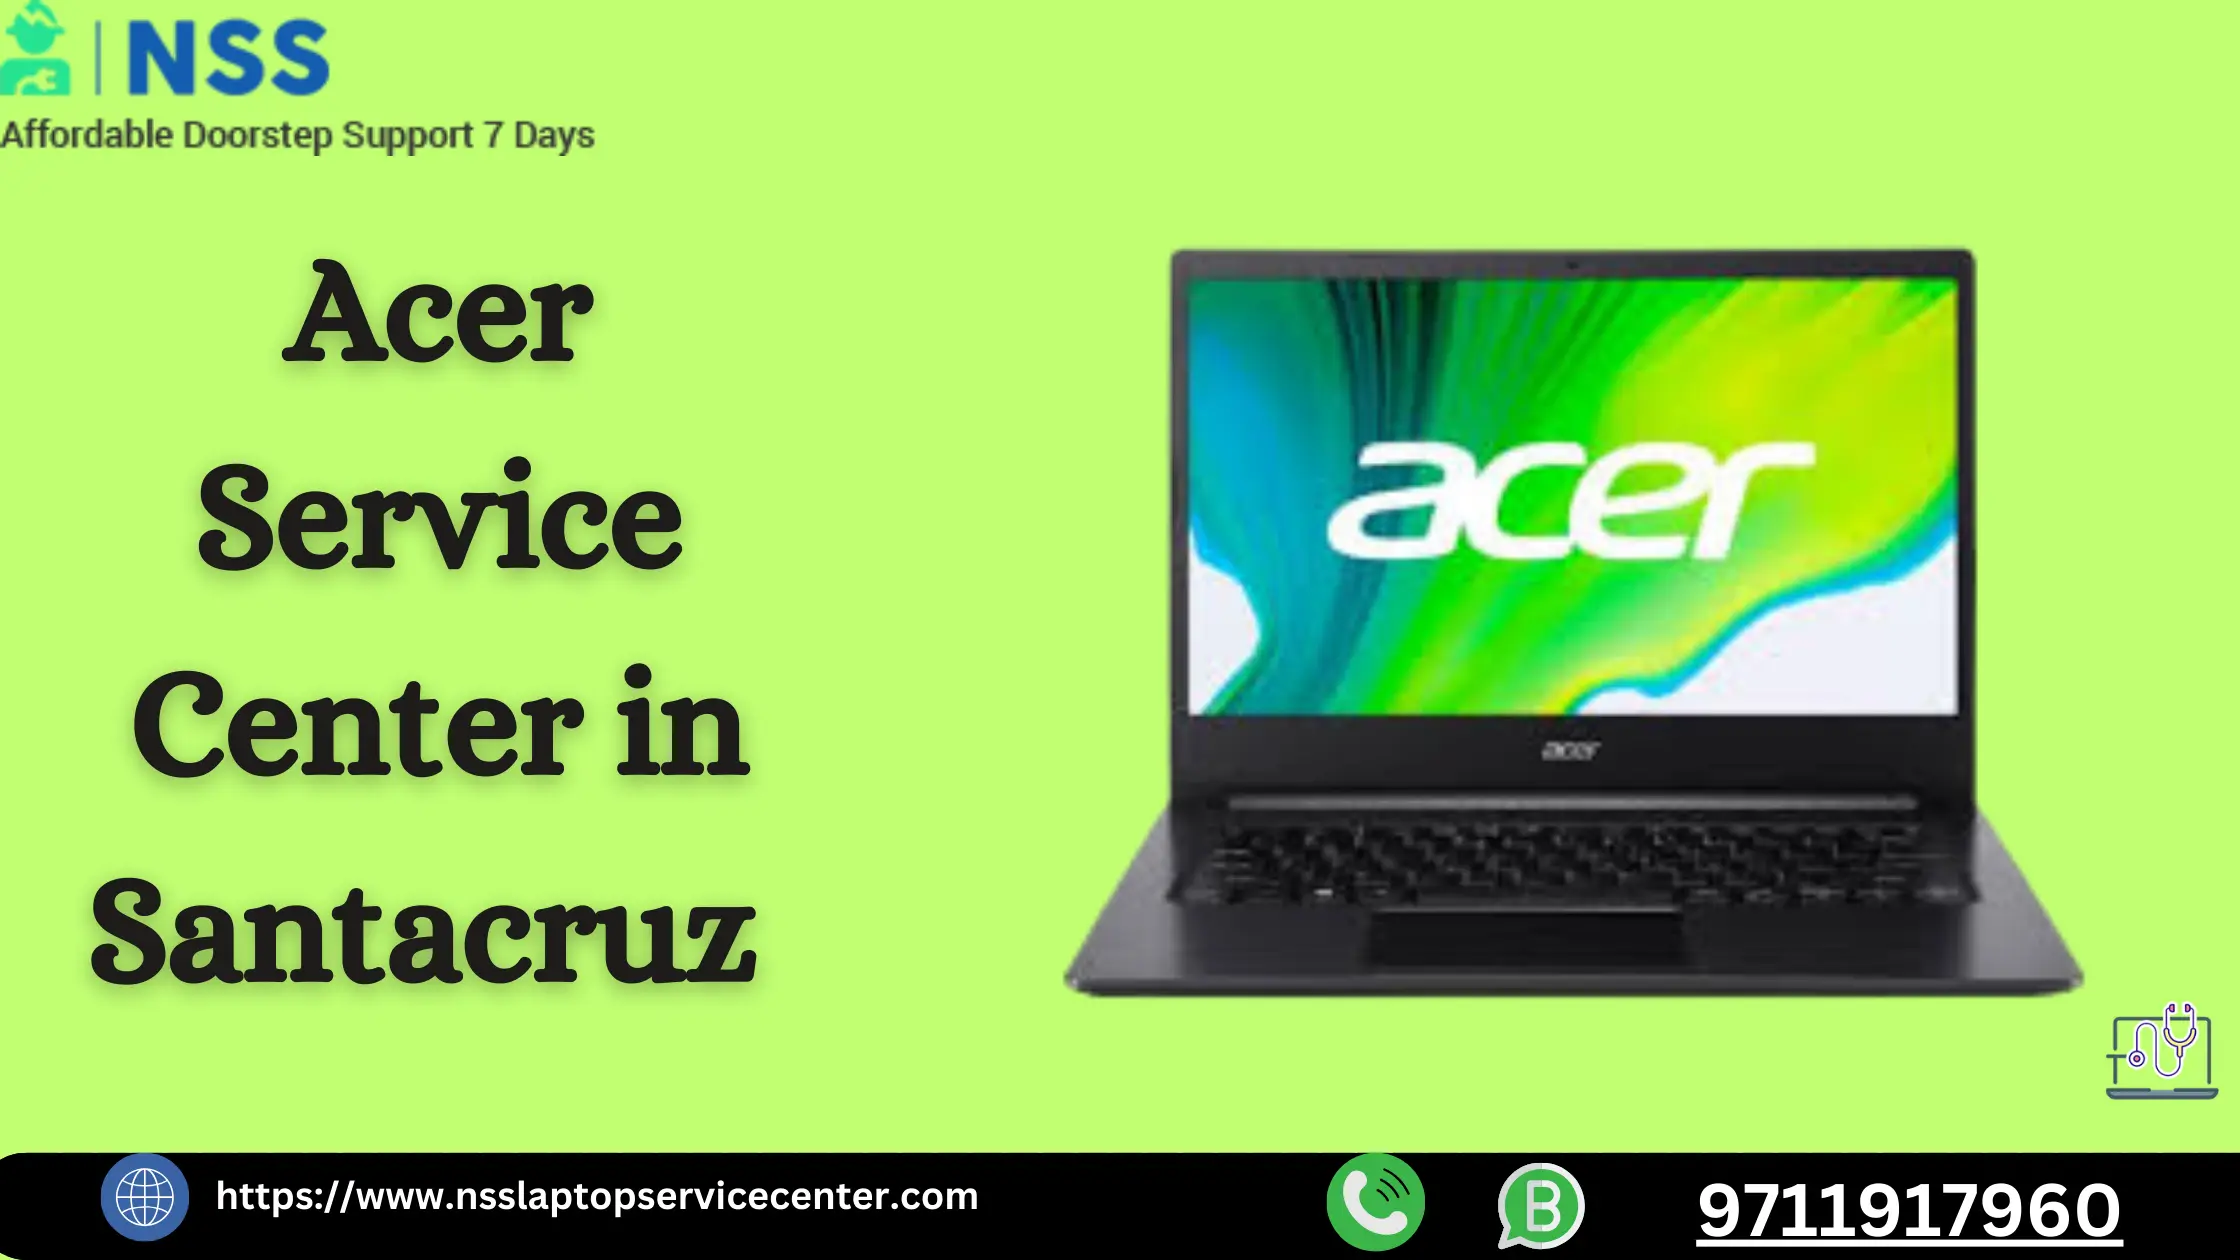 Acer Service Center in Santacruz Near Mumbai